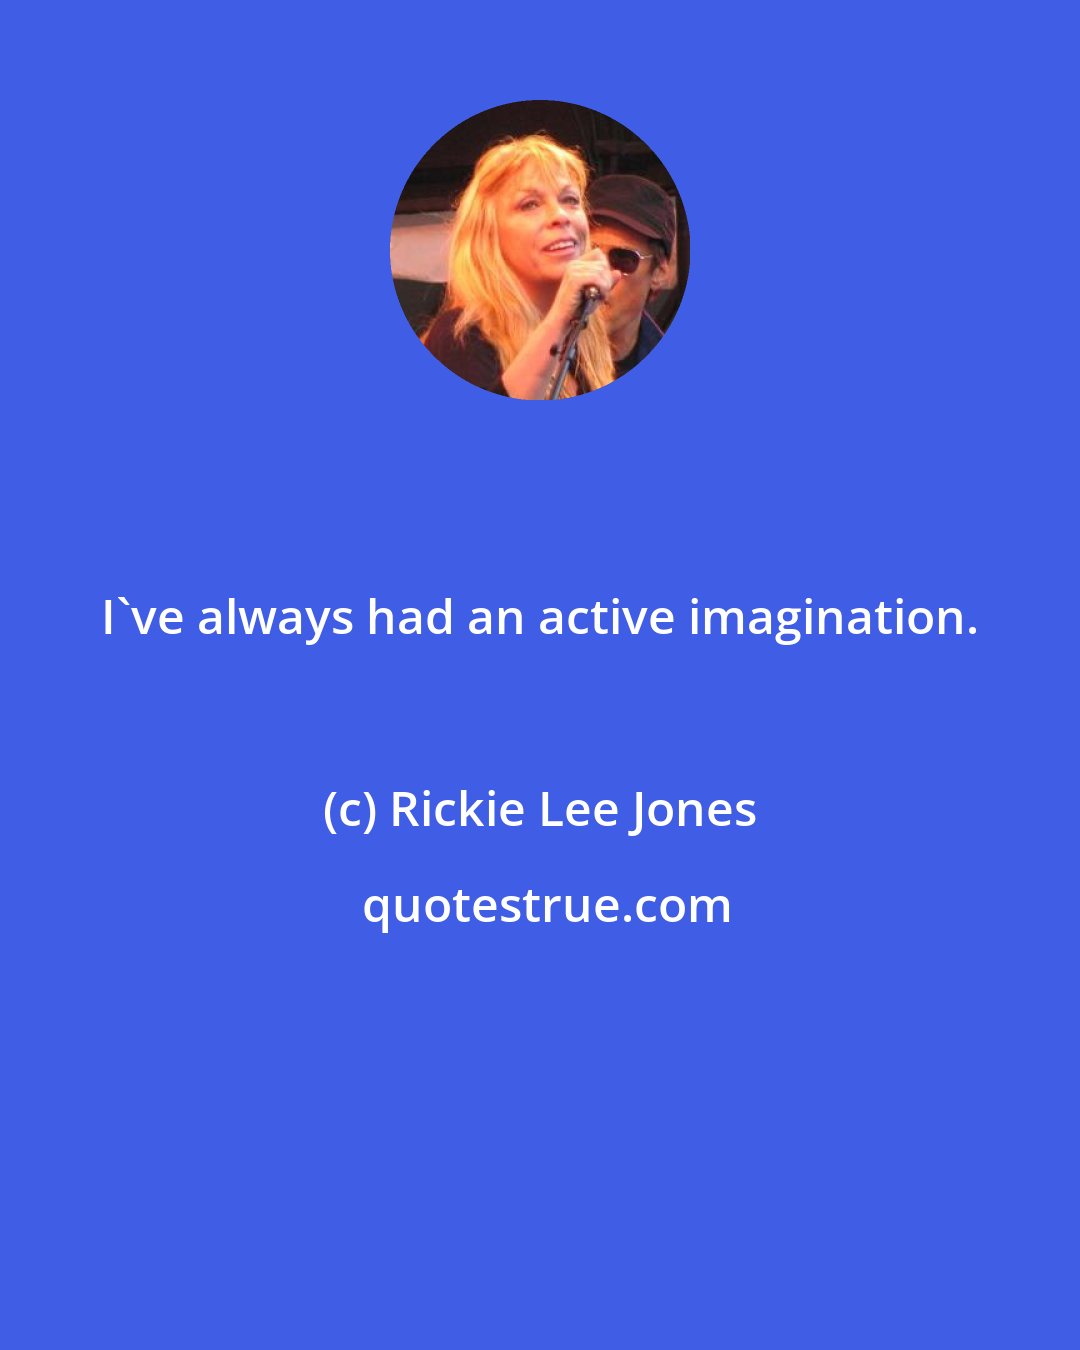 Rickie Lee Jones: I've always had an active imagination.